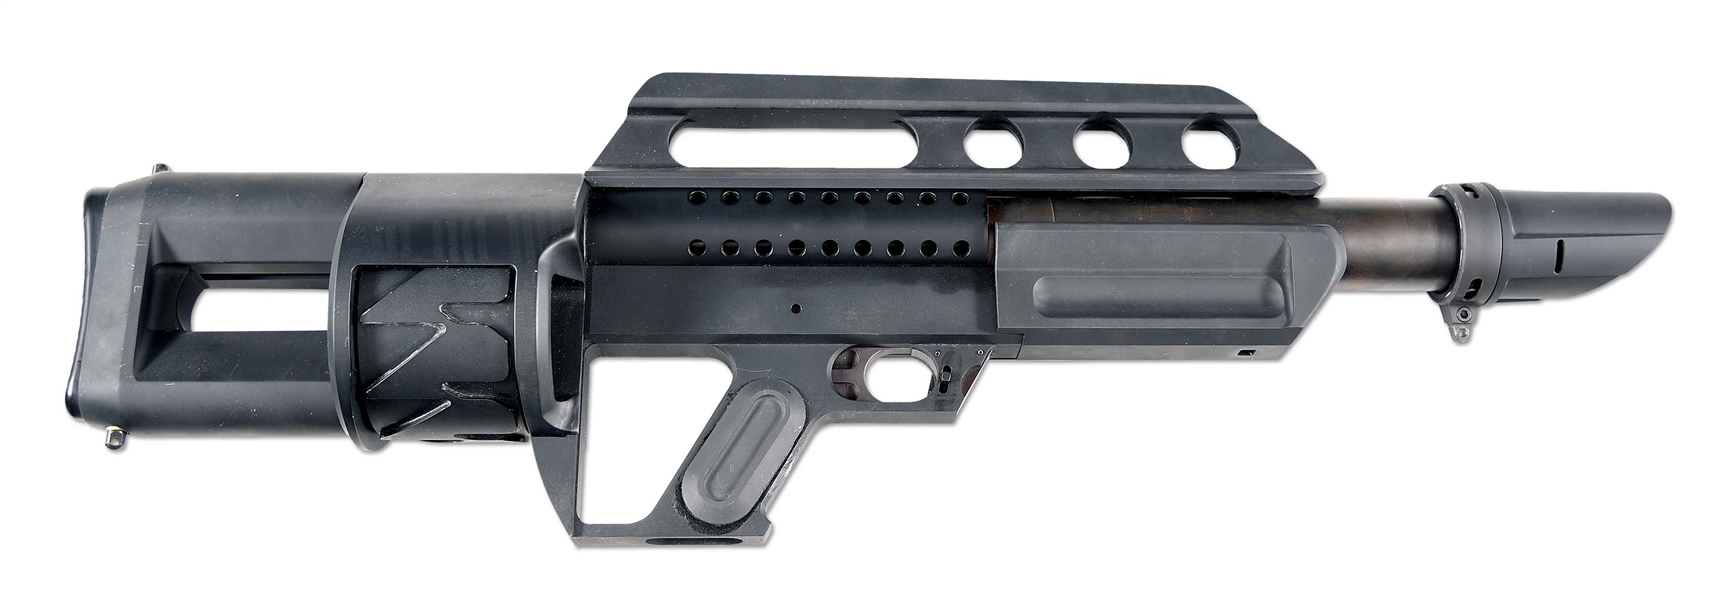 (N) PANCOR JACKHAMMER FULL-AUTO REGISTERED MACHINE GUN SHOTGUN MK3-A2 PRE-PRODUCTION PROTOYPE (FULLY TRANSFERABLE MACHINE GUN AND DESTRUCTIVE DEVICE).